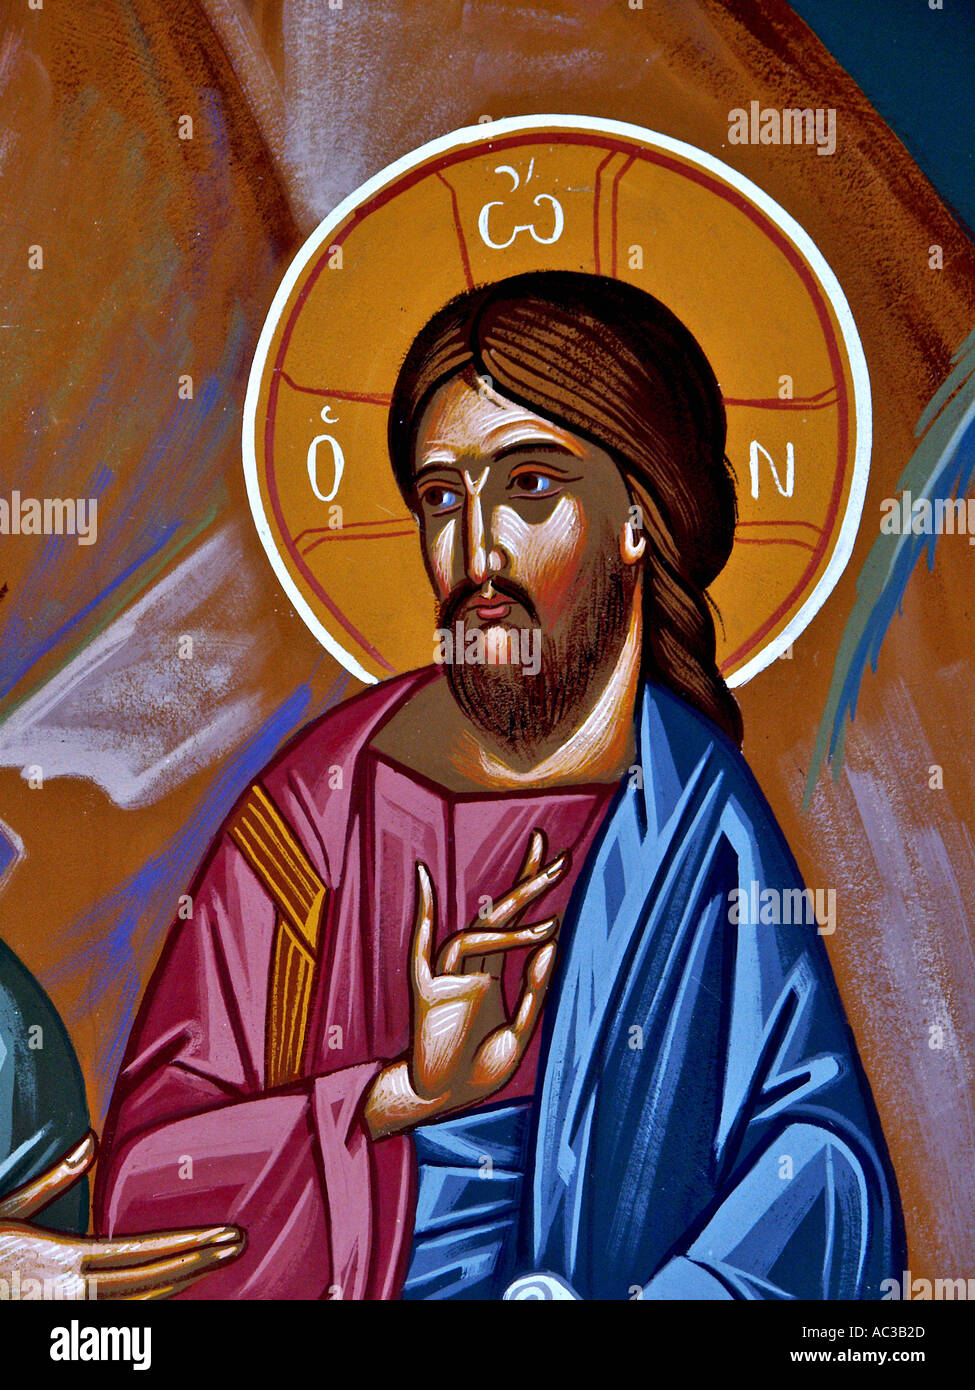 Jesus Christus Segen Porträt Wand Abbildung Kreta Krete Insel Griechenland Stockfoto